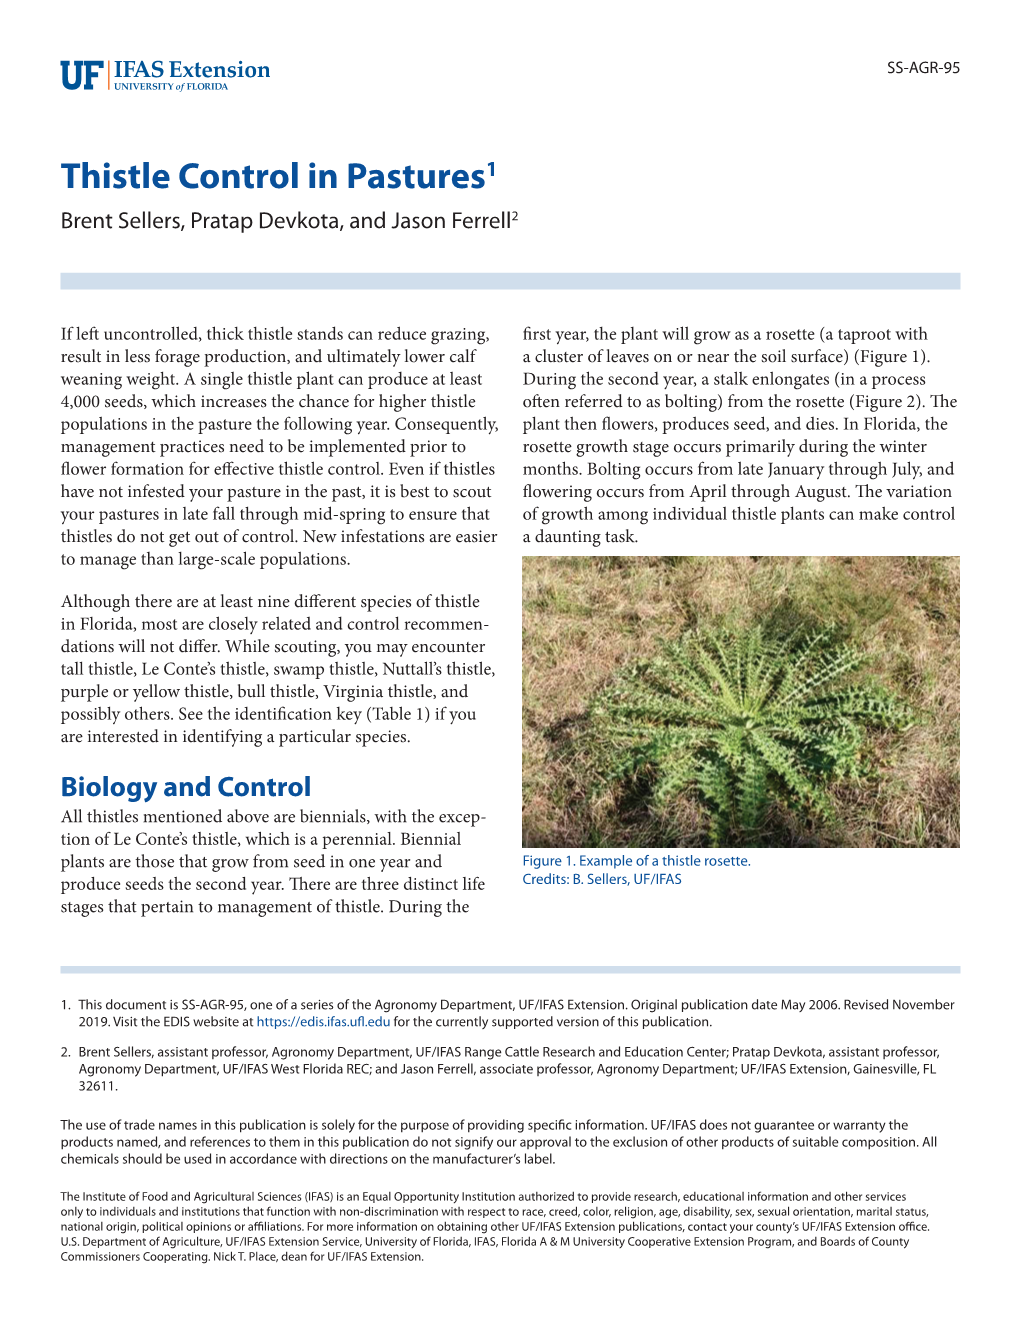 Thistle Control in Pastures1 Brent Sellers, Pratap Devkota, and Jason Ferrell2